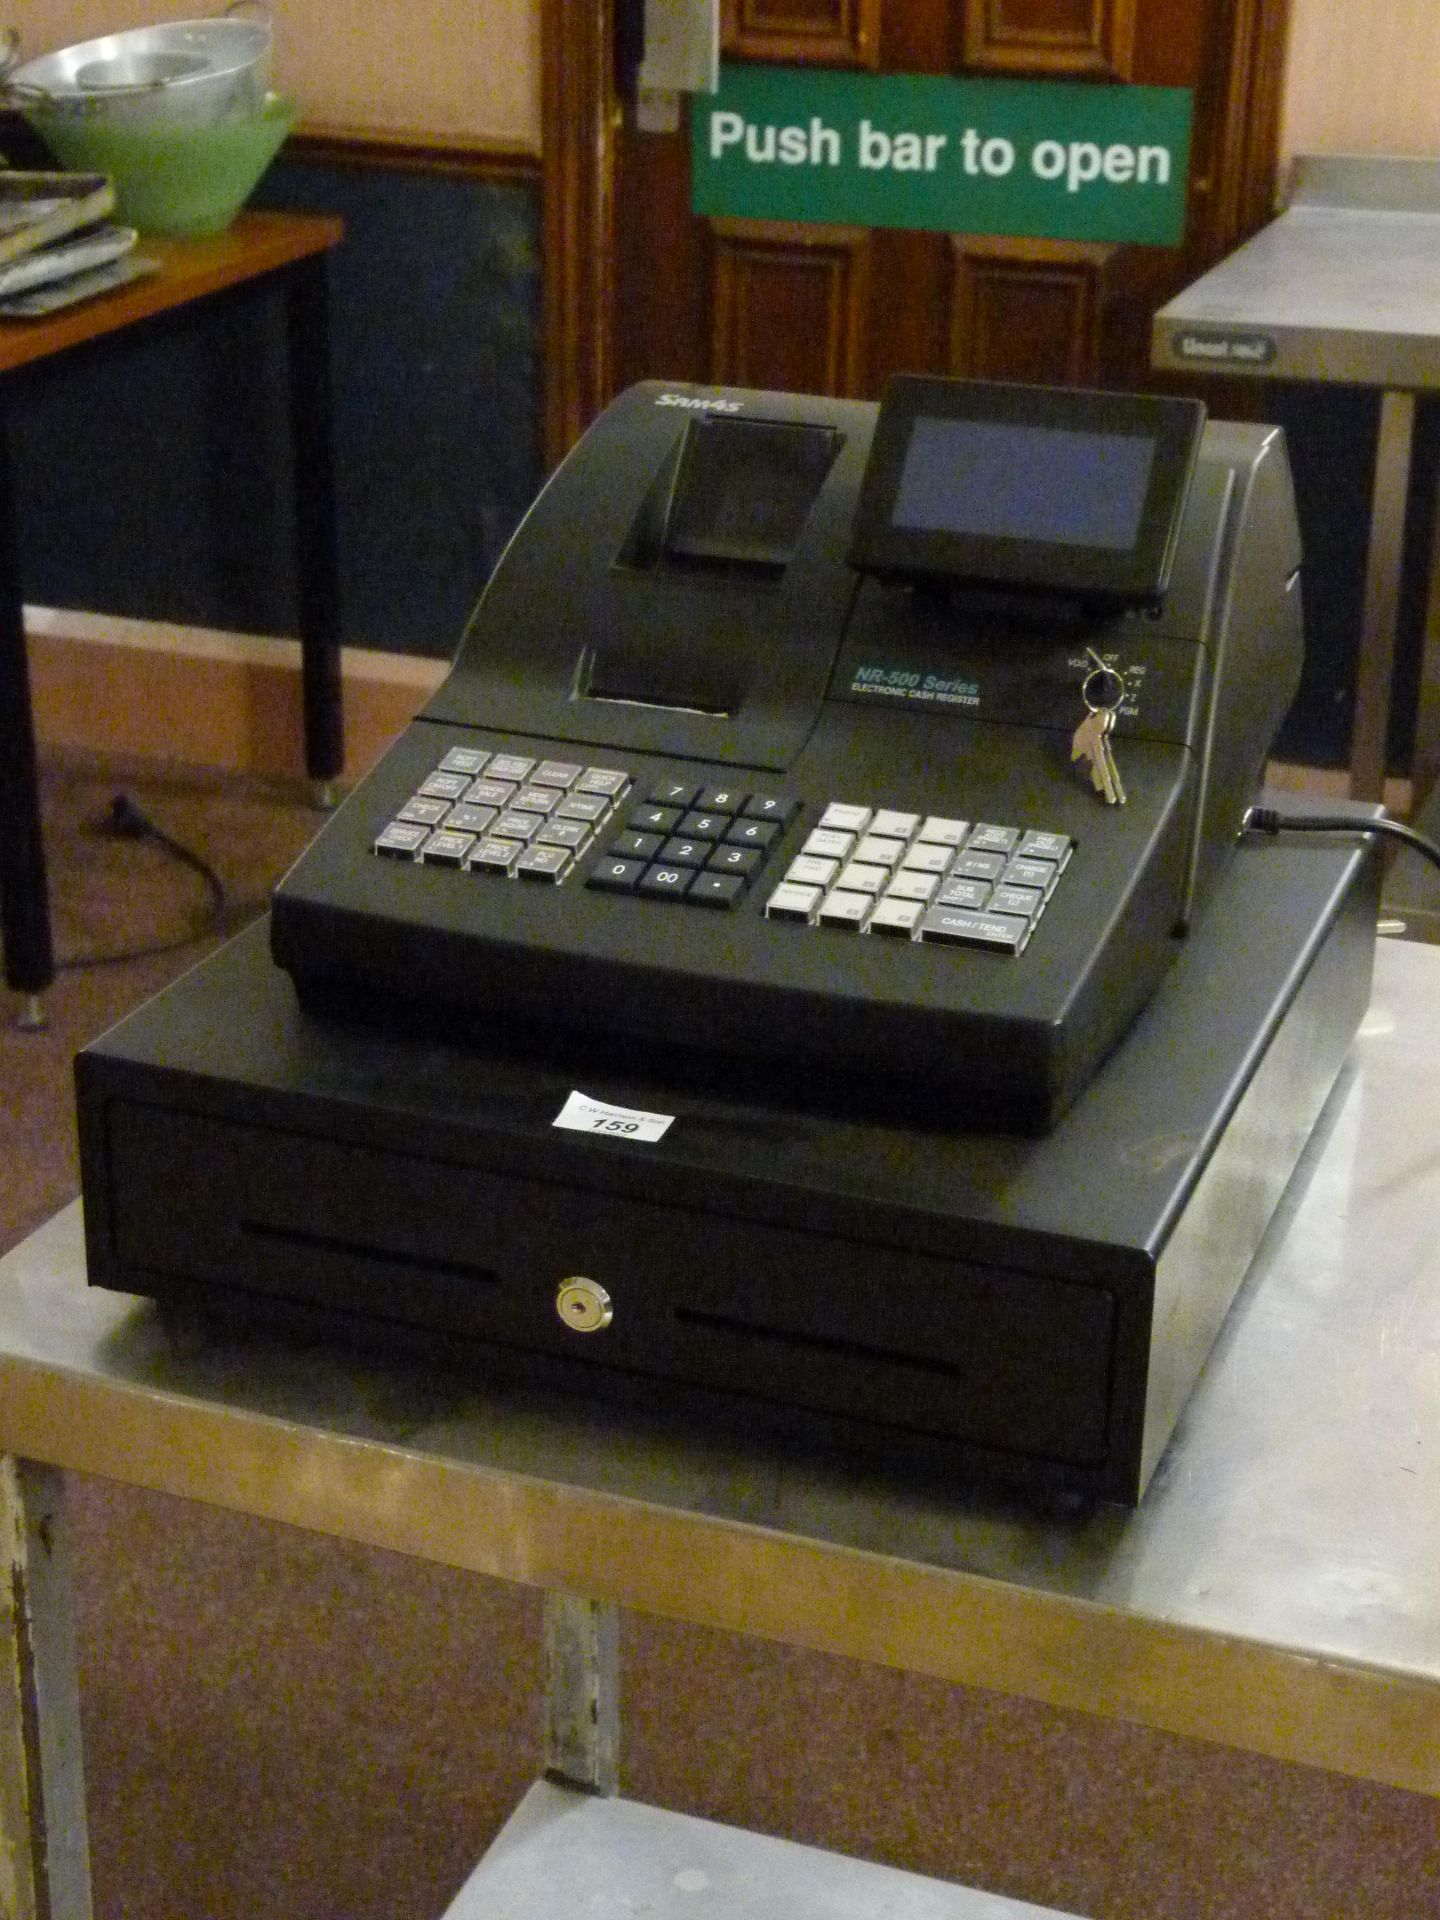 Sam45 NR-500 series electronic cash register